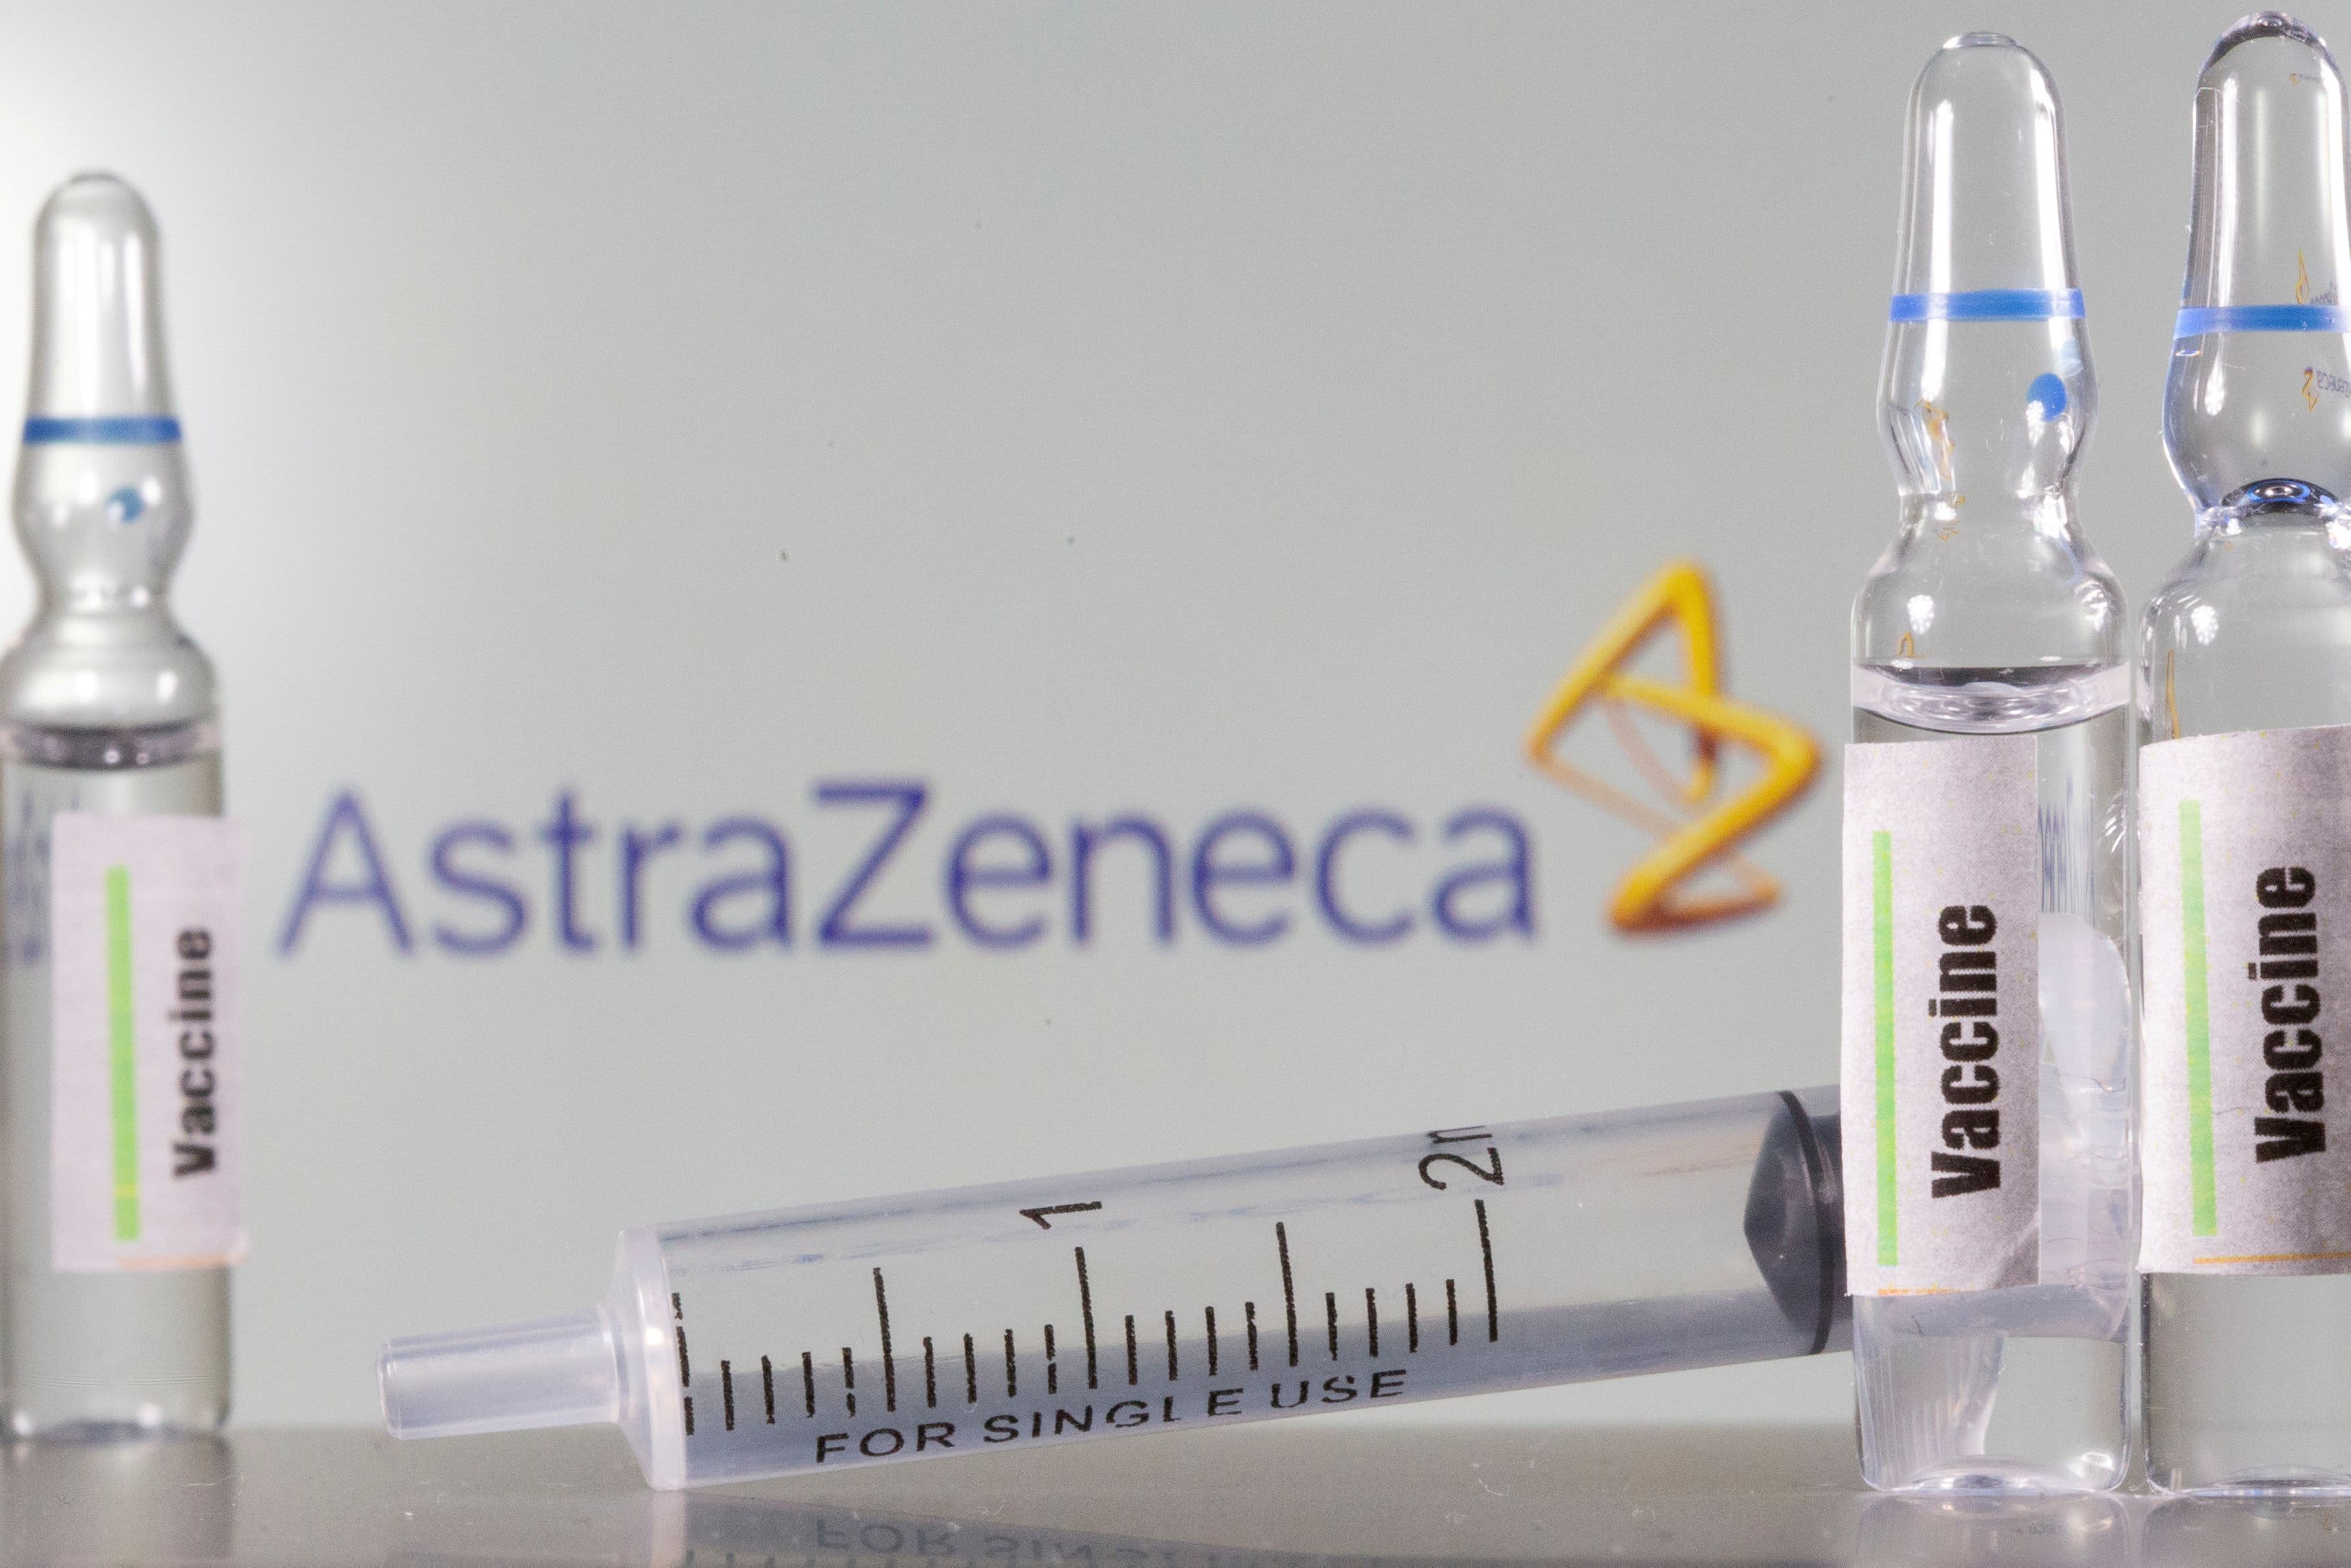 Oxford-AstraZeneca coronavirus vaccine triggers immune response among adults - CNBC